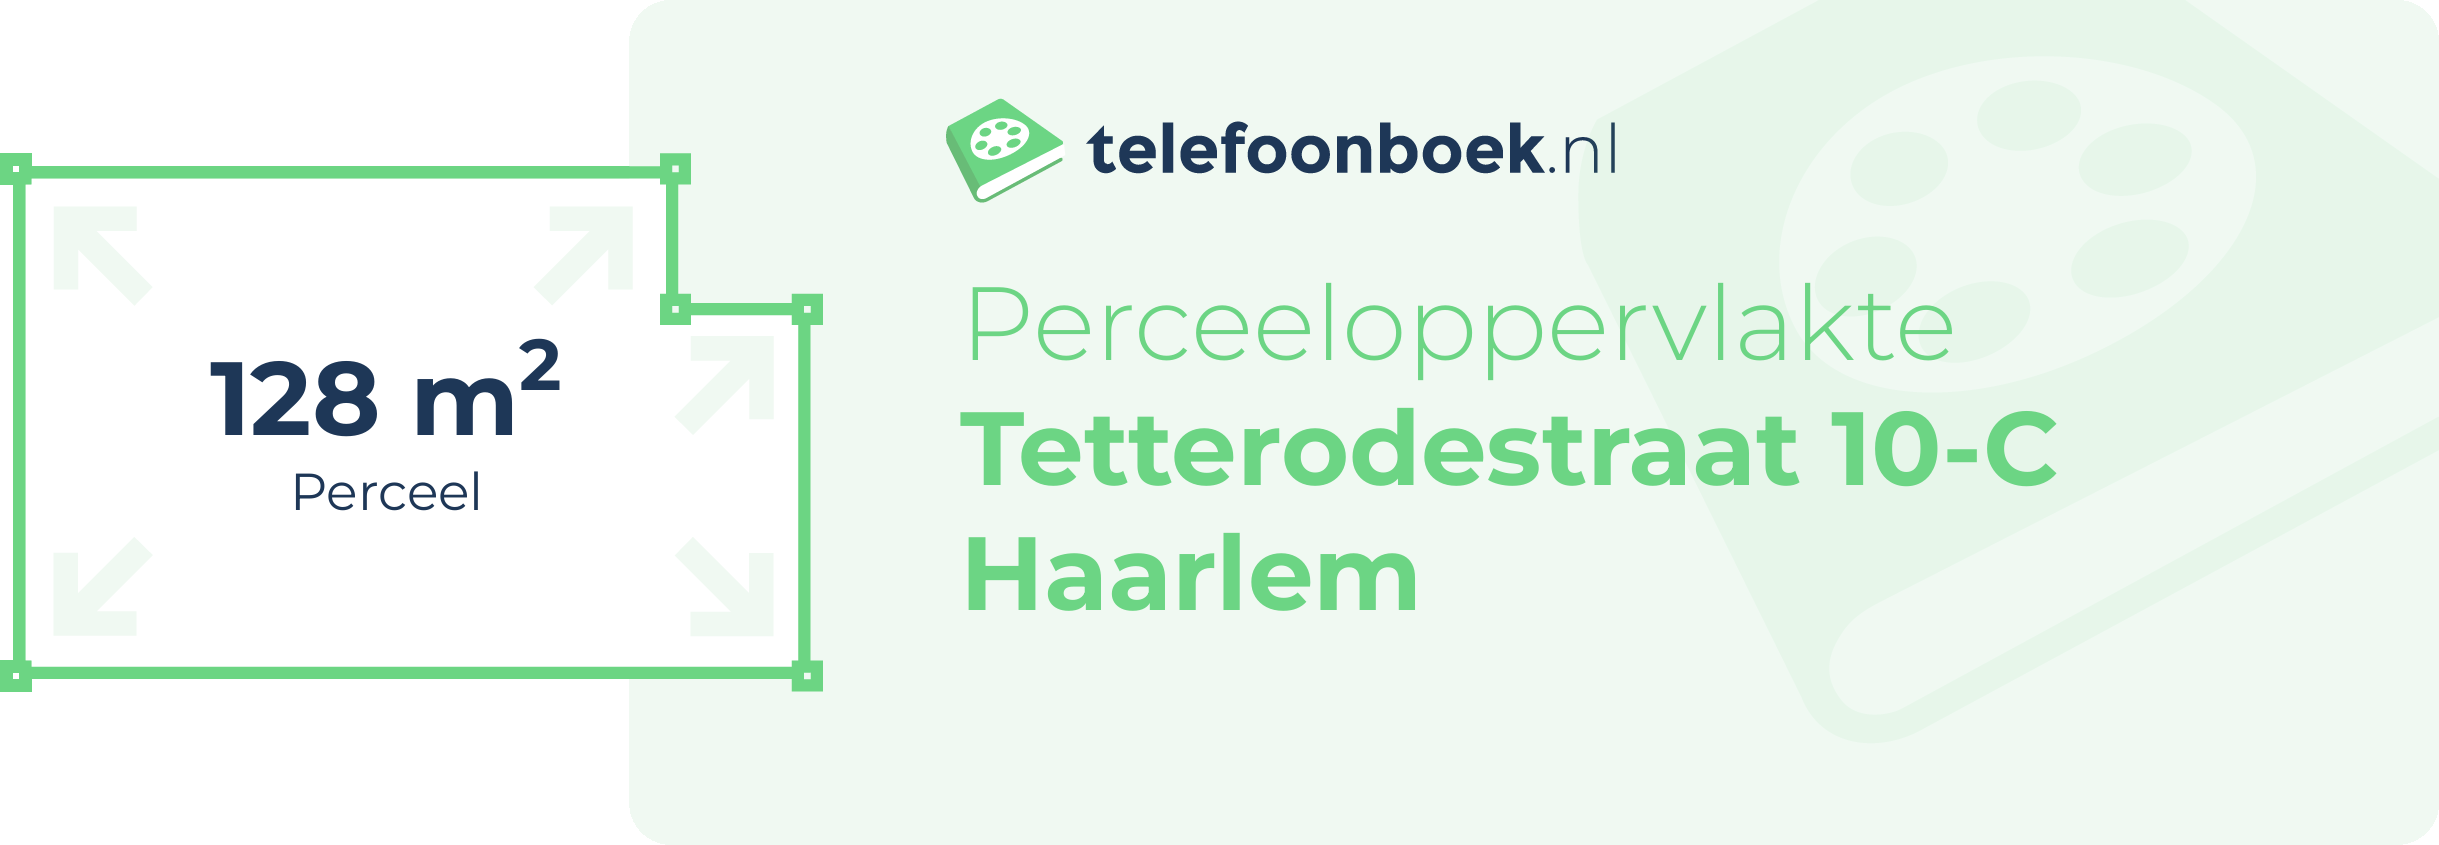 Perceeloppervlakte Tetterodestraat 10-C Haarlem